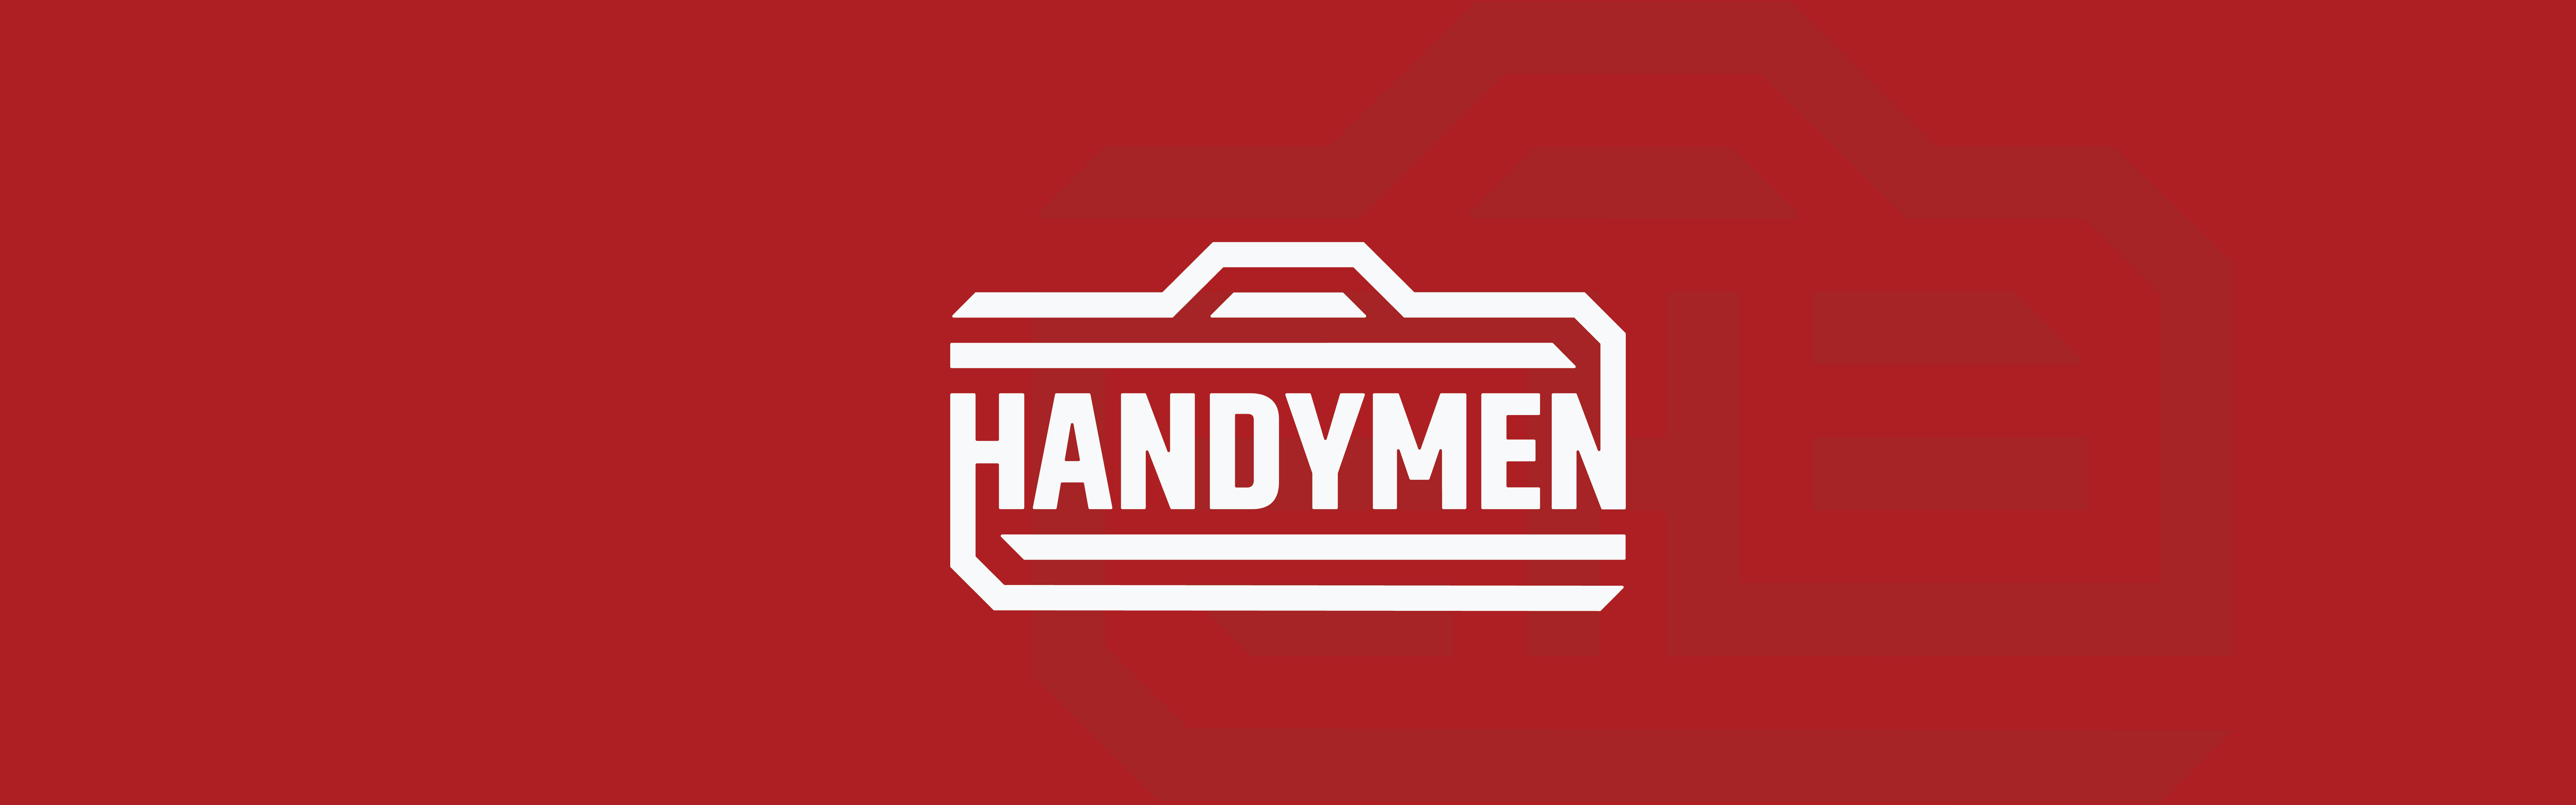 Handymen logo design